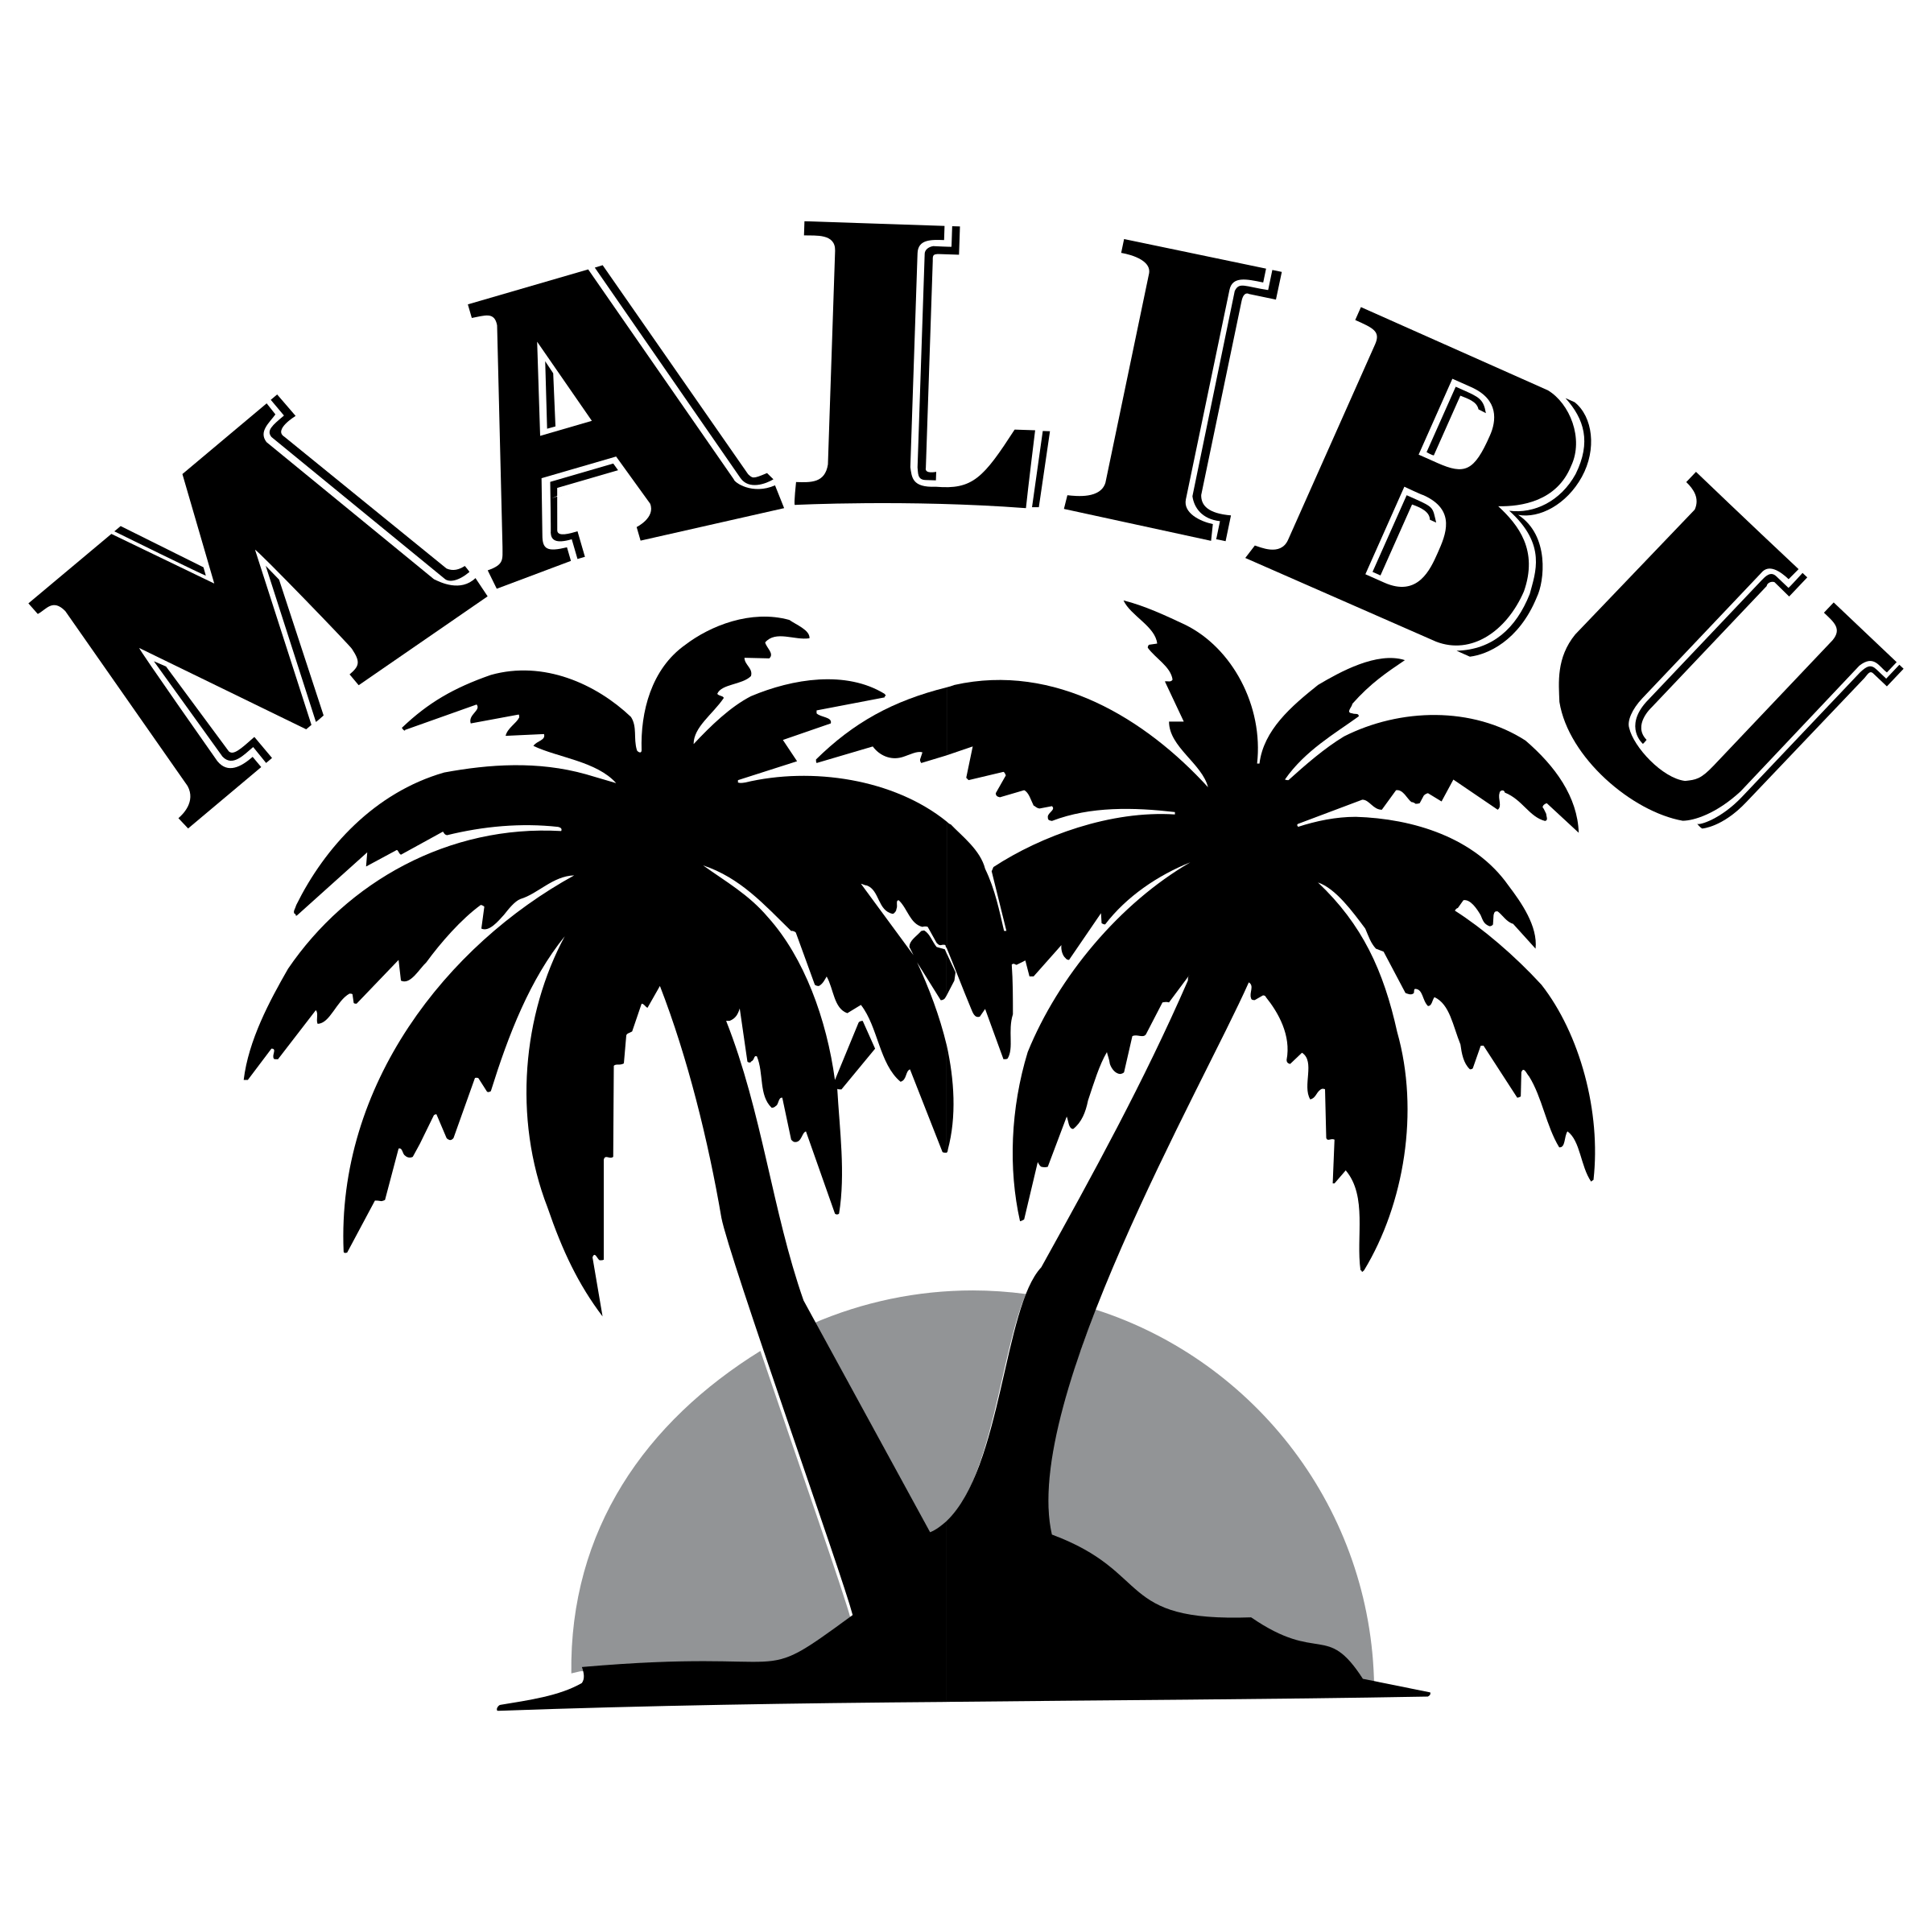 Malibu Logo - Malibu Logo PNG Transparent & SVG Vector - Freebie Supply